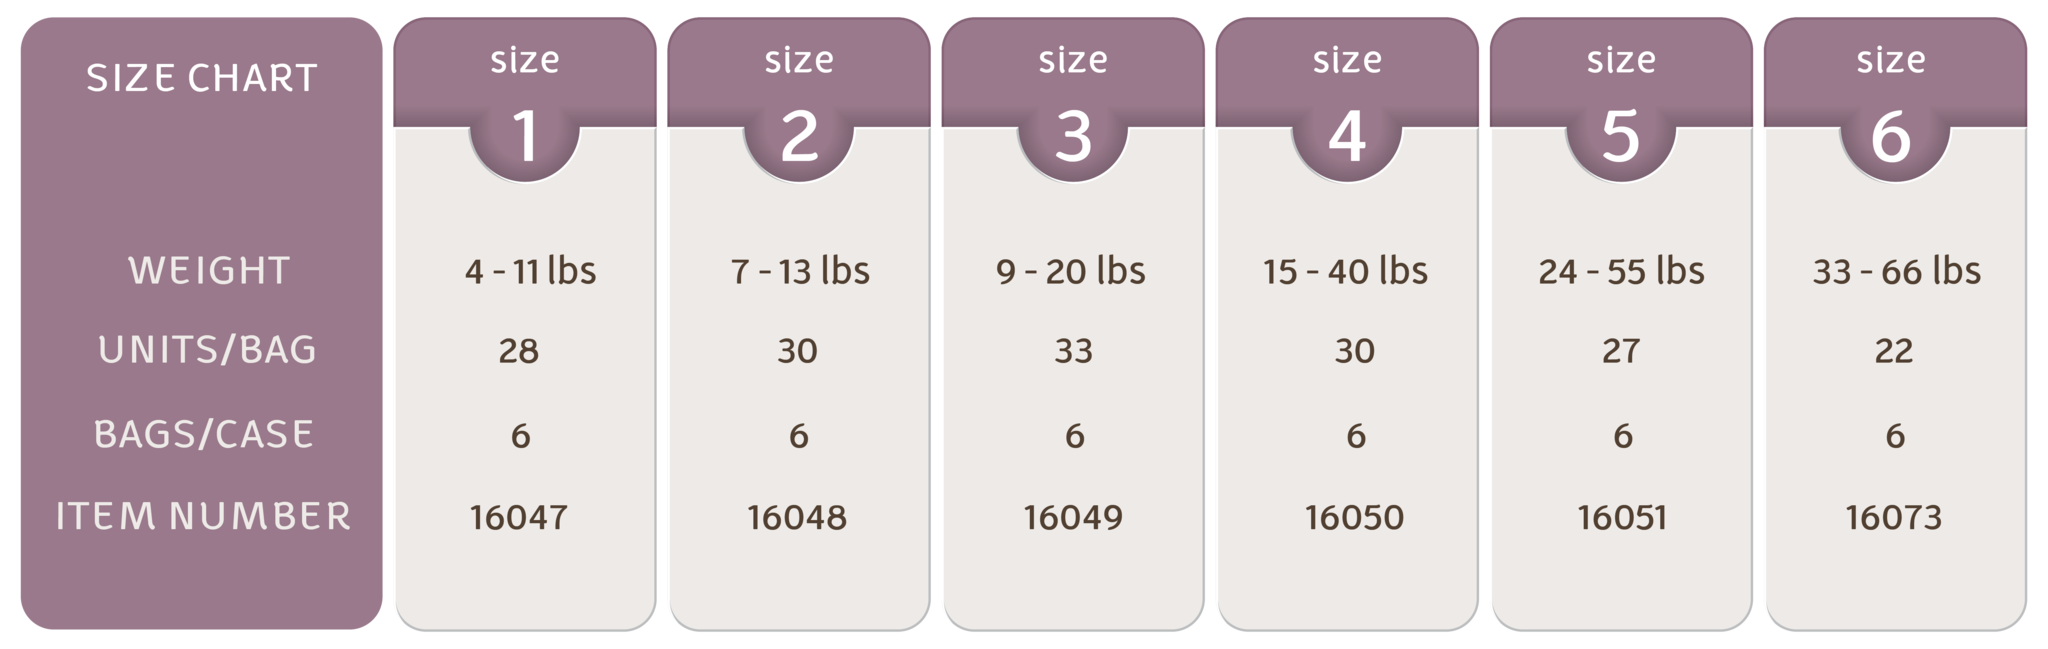 Diaper Size Weight Chart